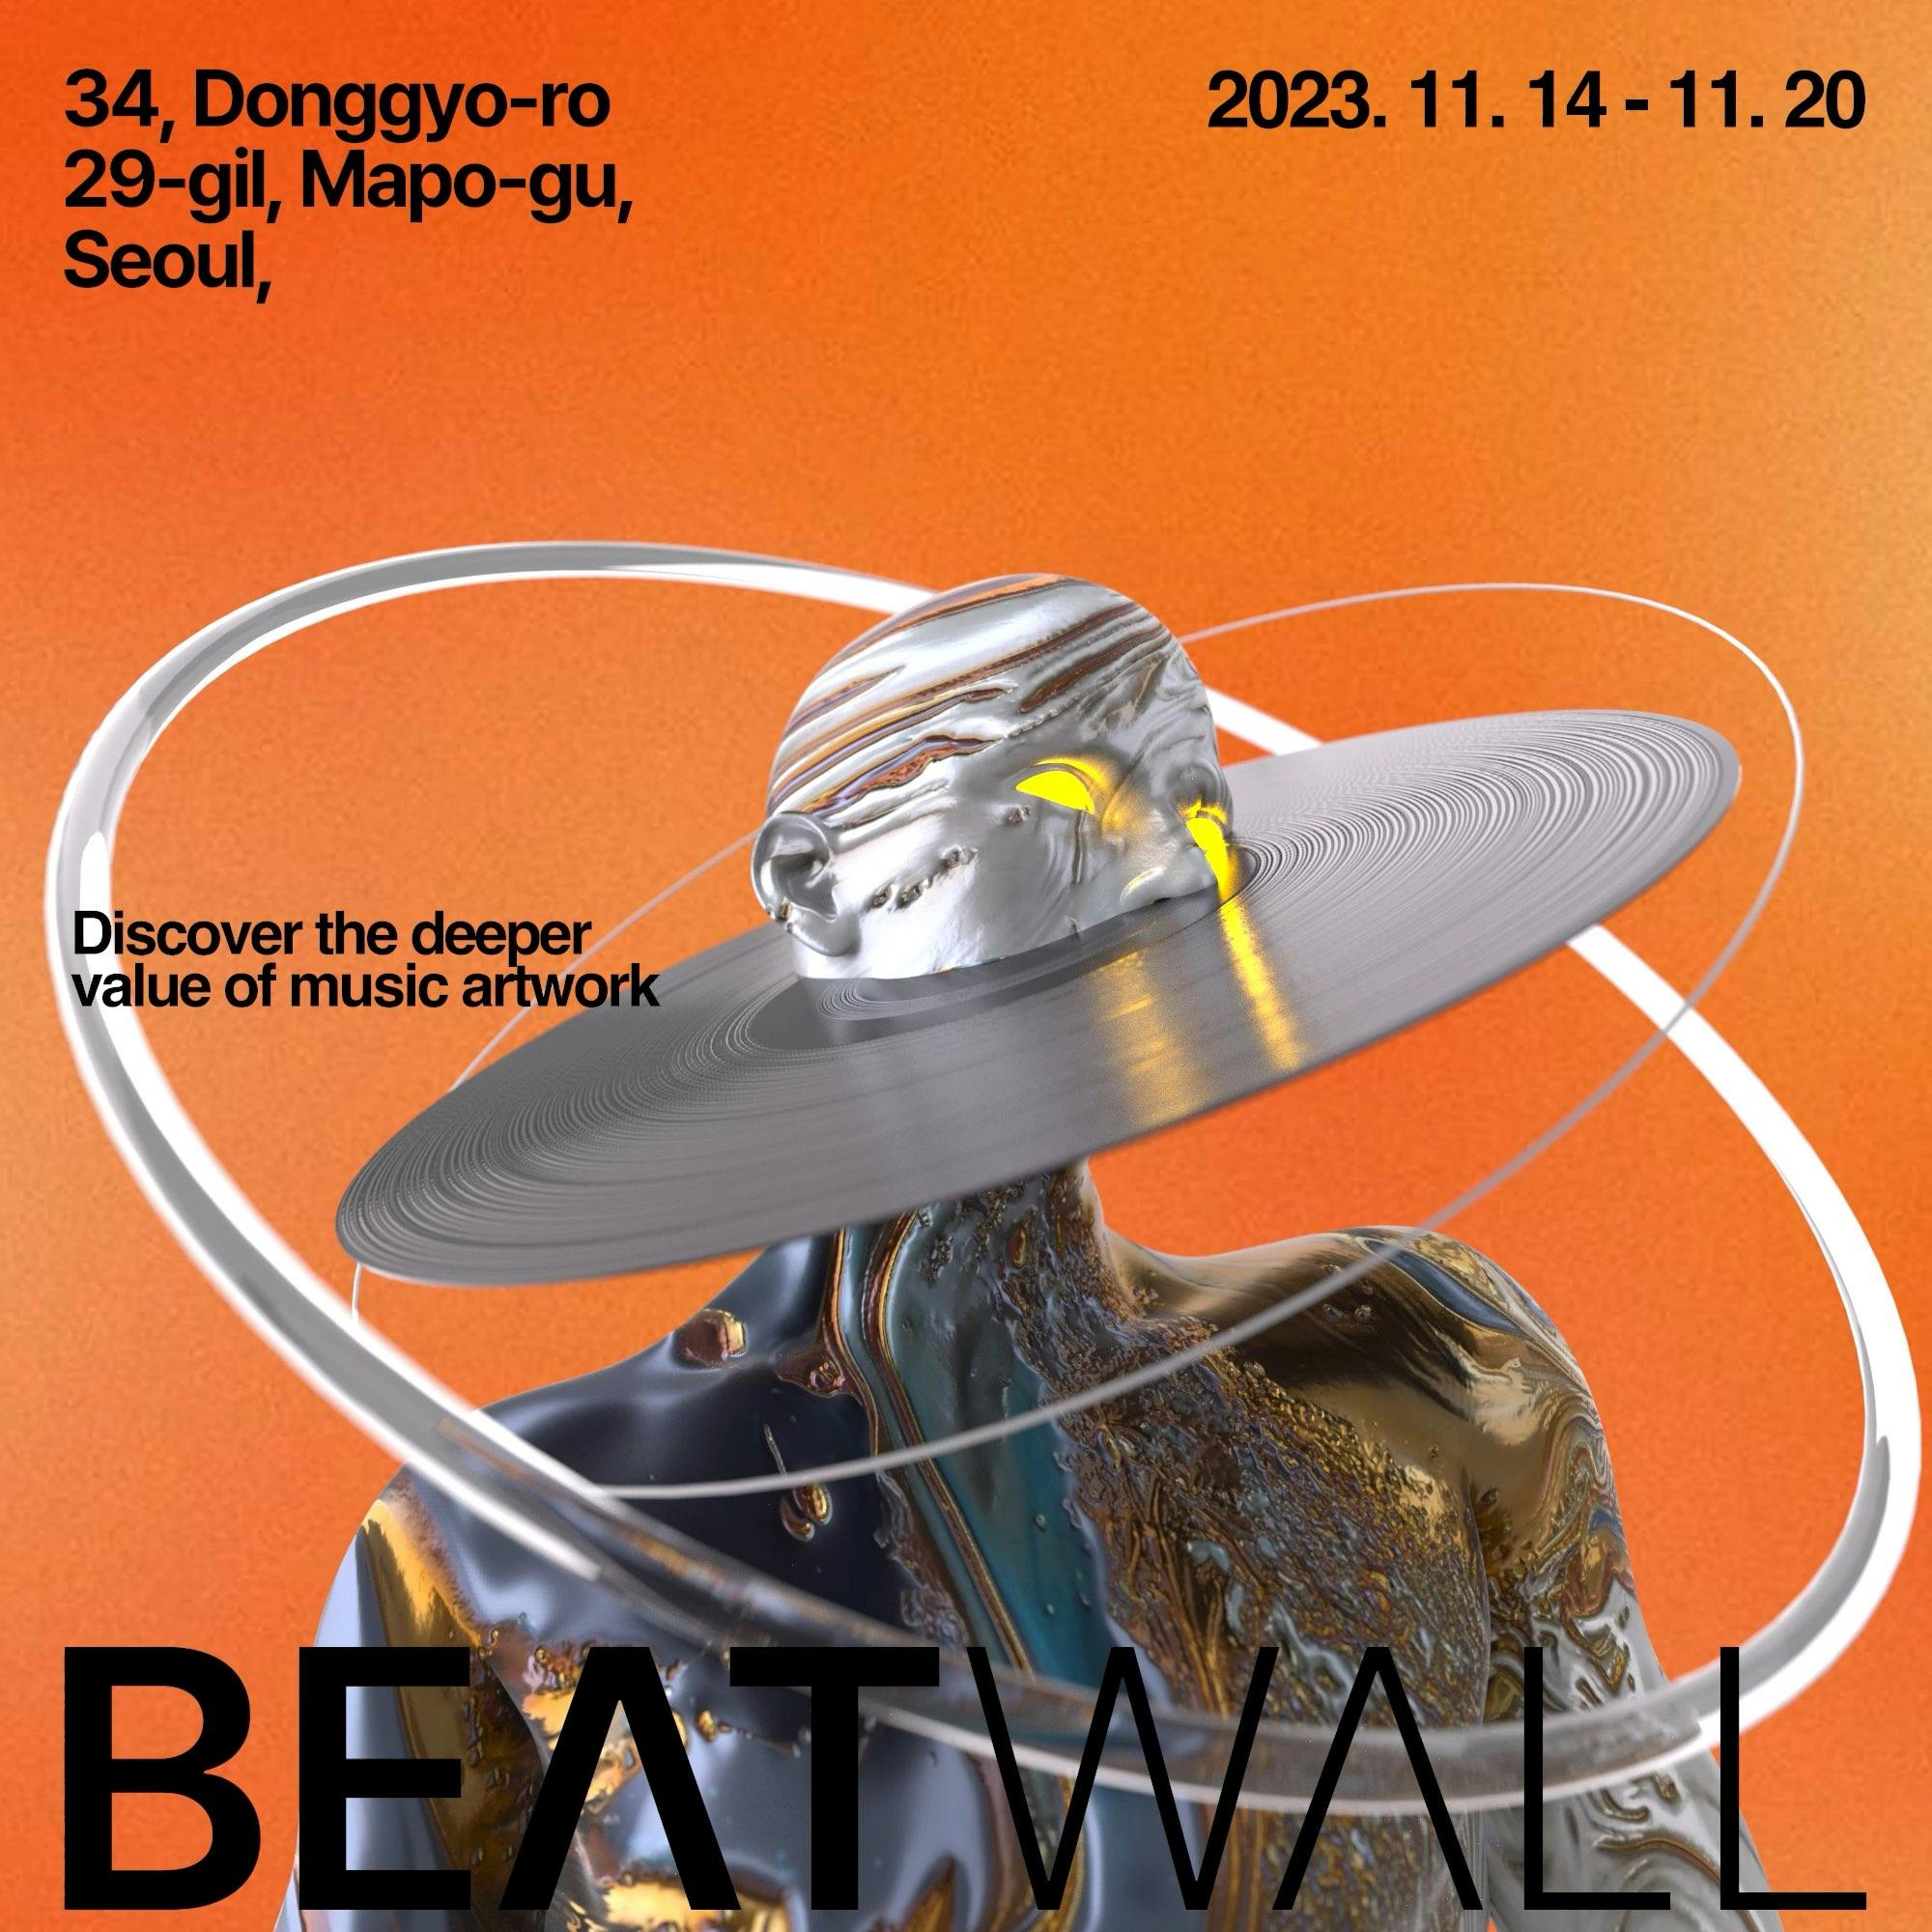 BeatWall - Free Ticket